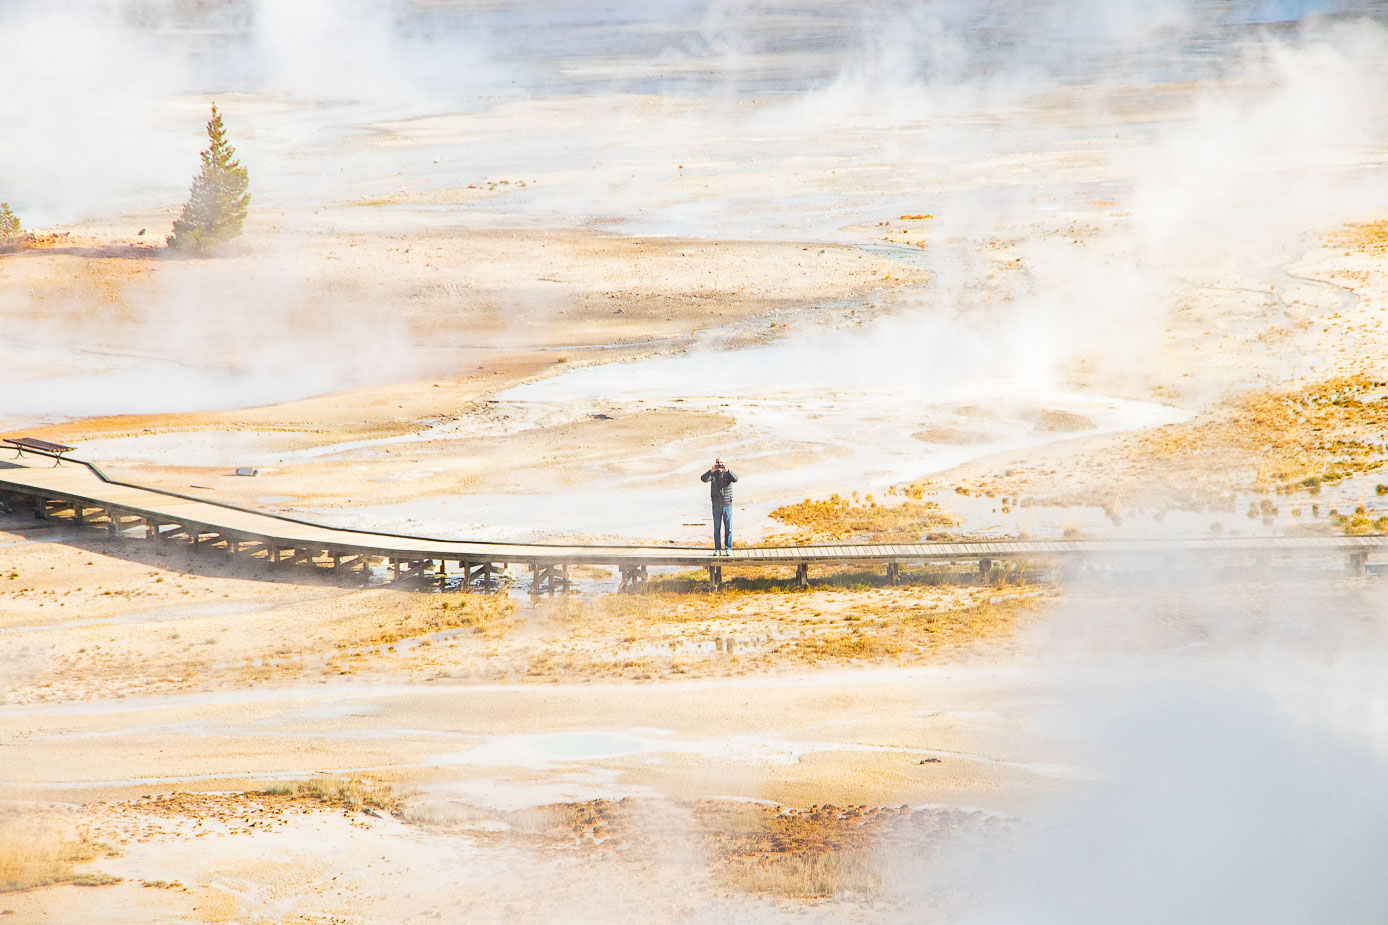 norris geyser basin yellowsonte national park (1)